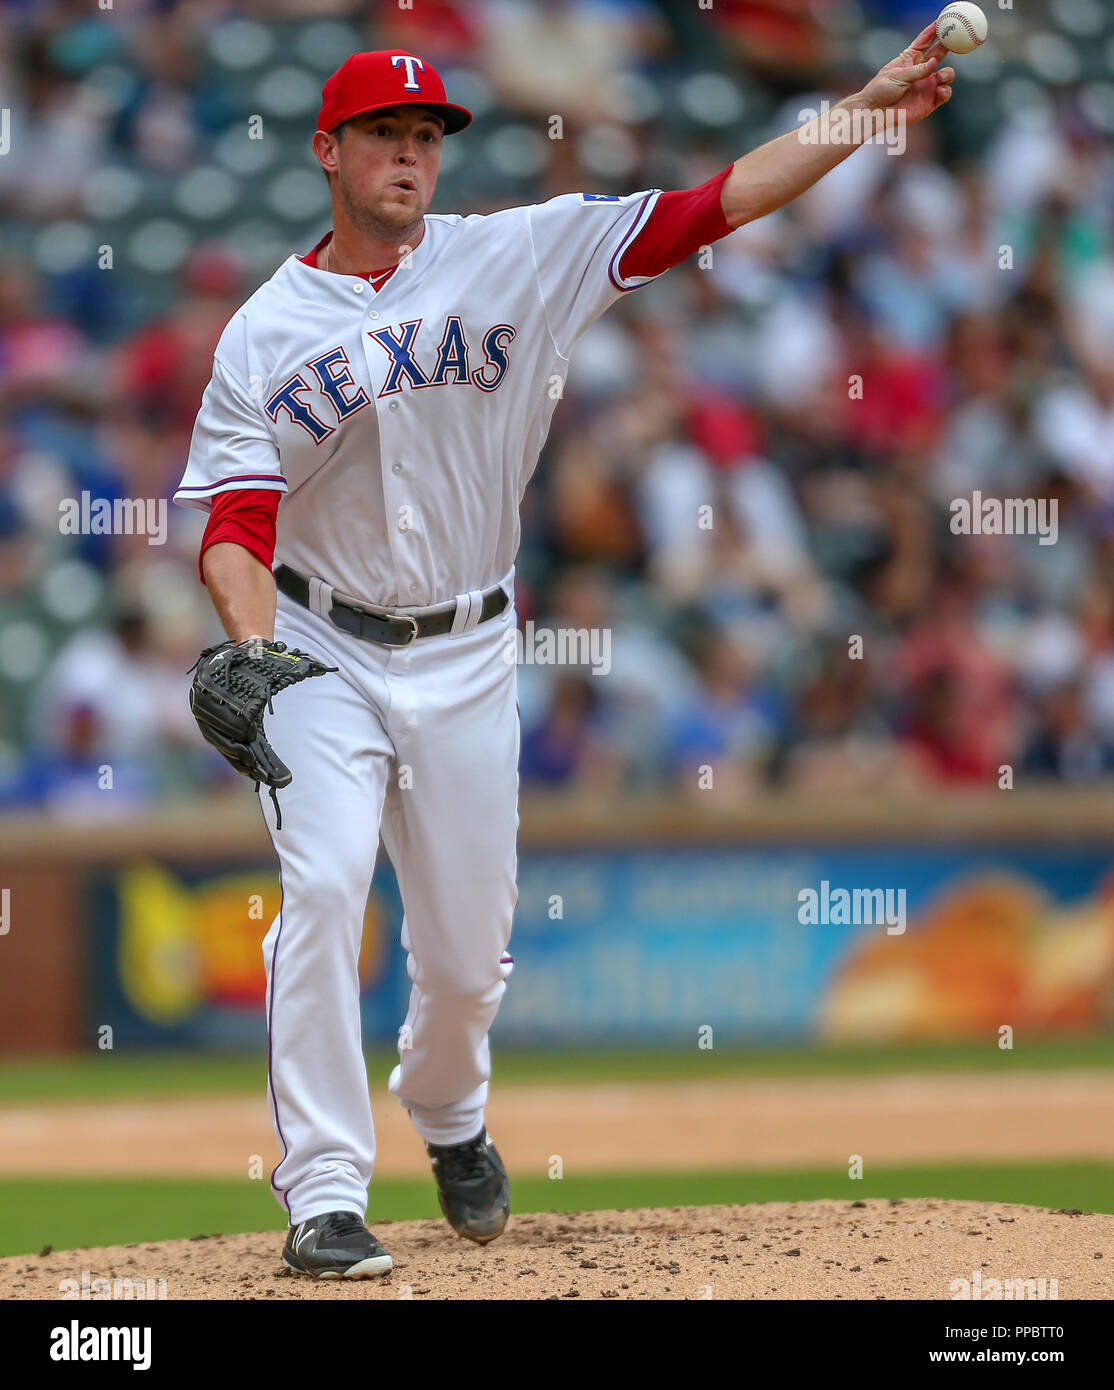 2019 Topps #605 Jeffrey Springs Texas Rangers Rookie Baseball Card 